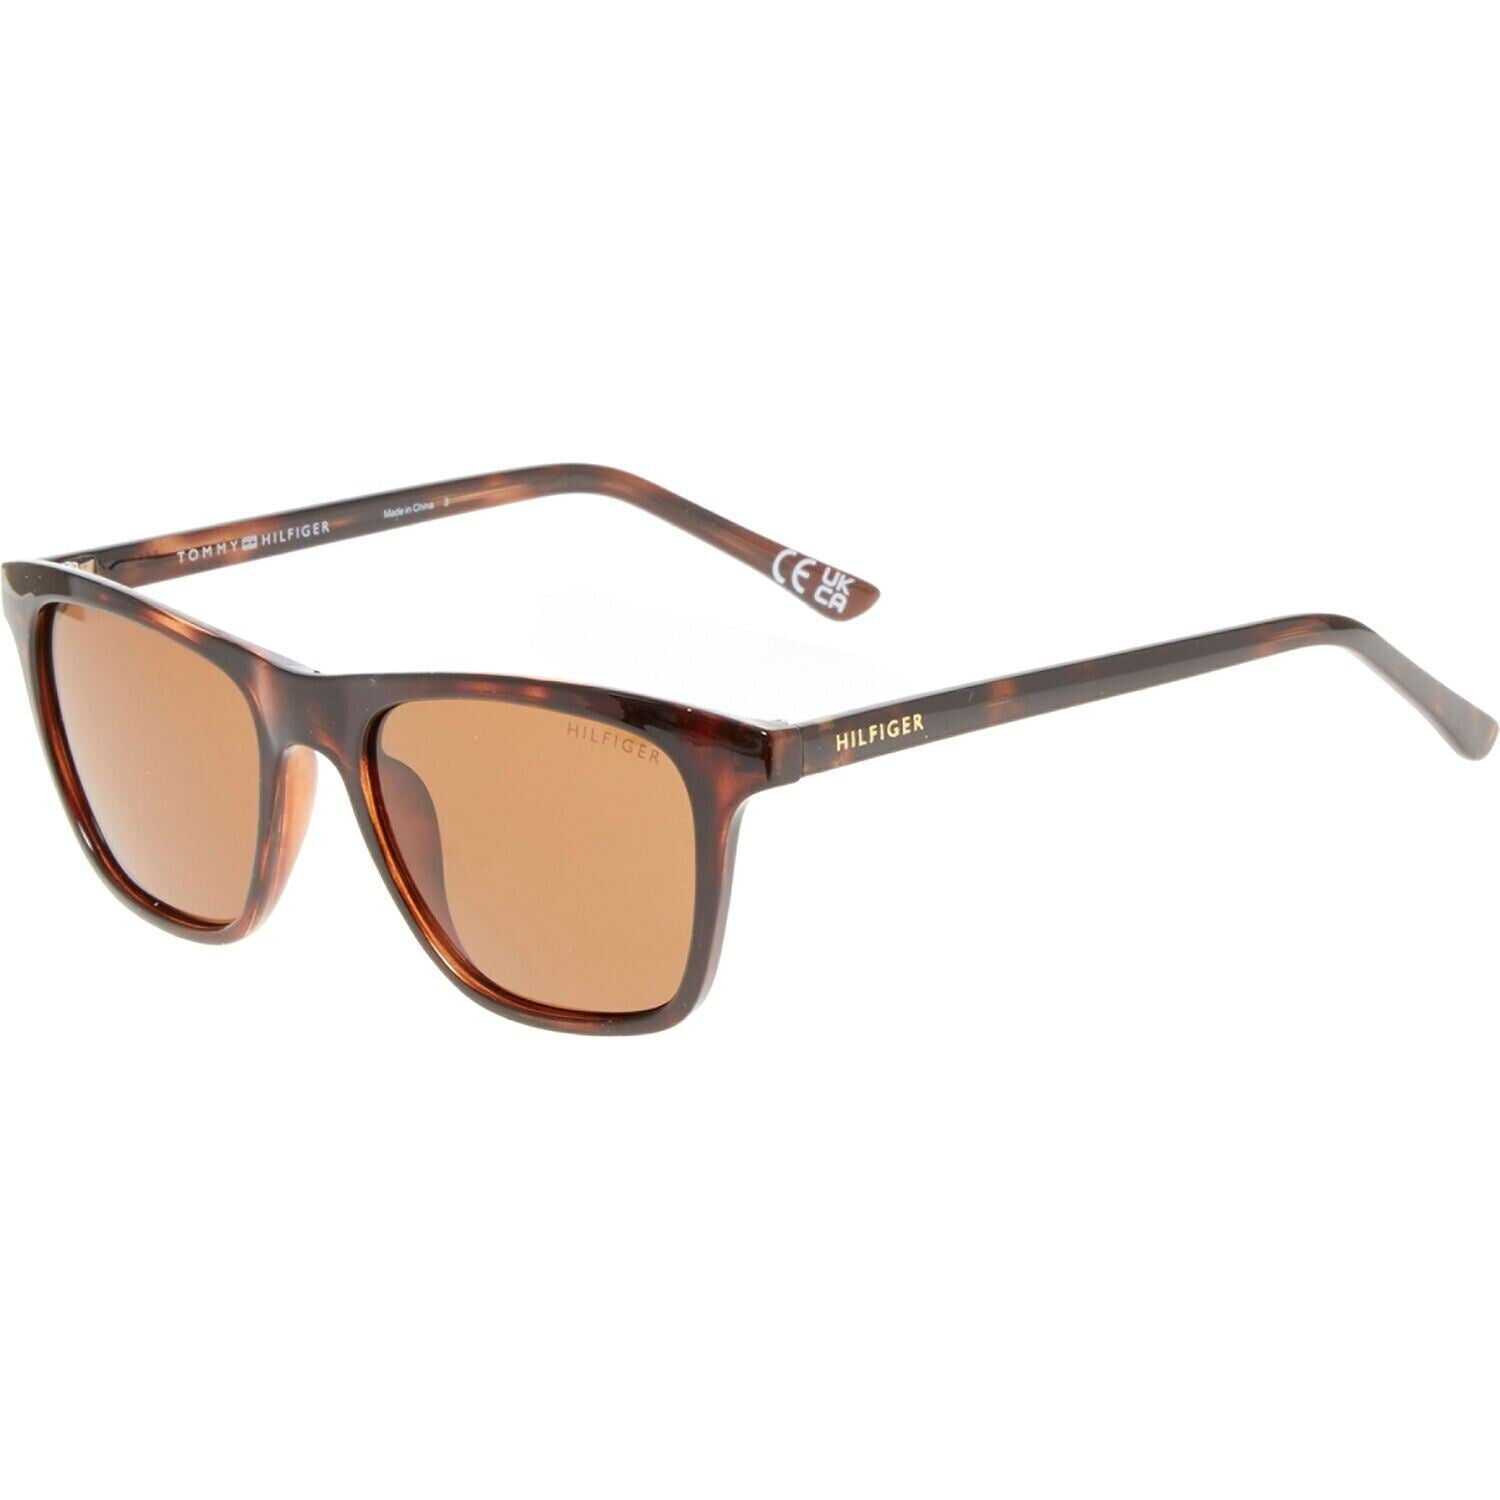 TOMMY HILFIGER Men's TATE Brown Gloss Tortoiseshell Sunglasses, OL562